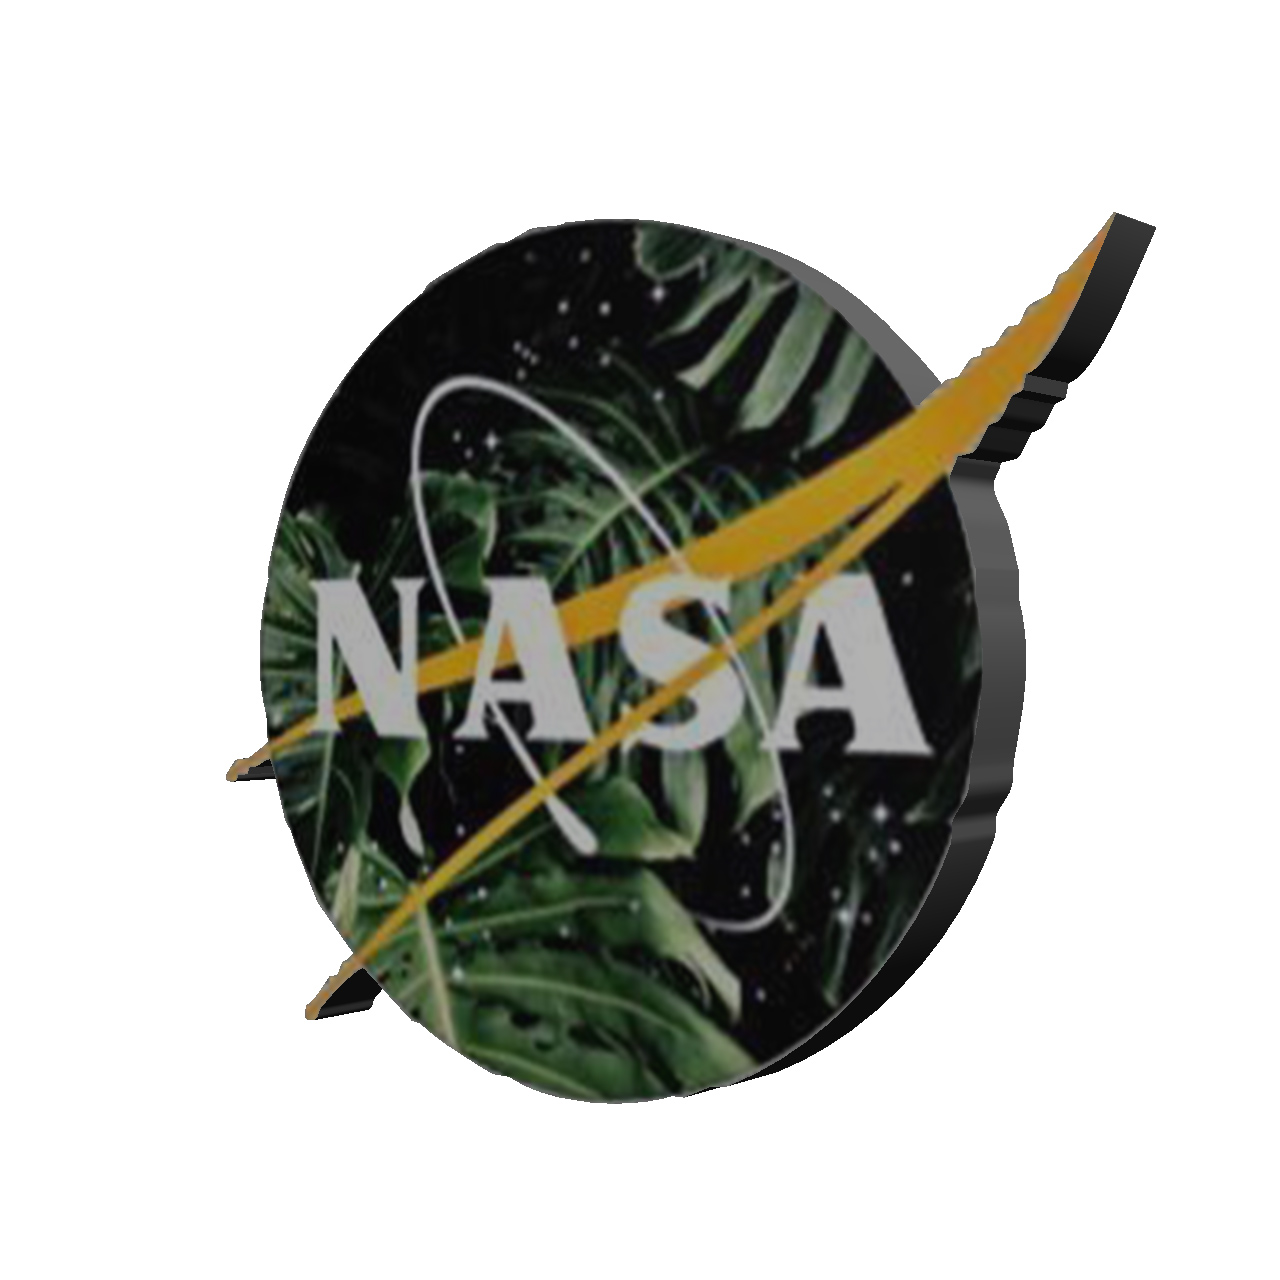 استیکر کنسول طرح ناسا کد 486